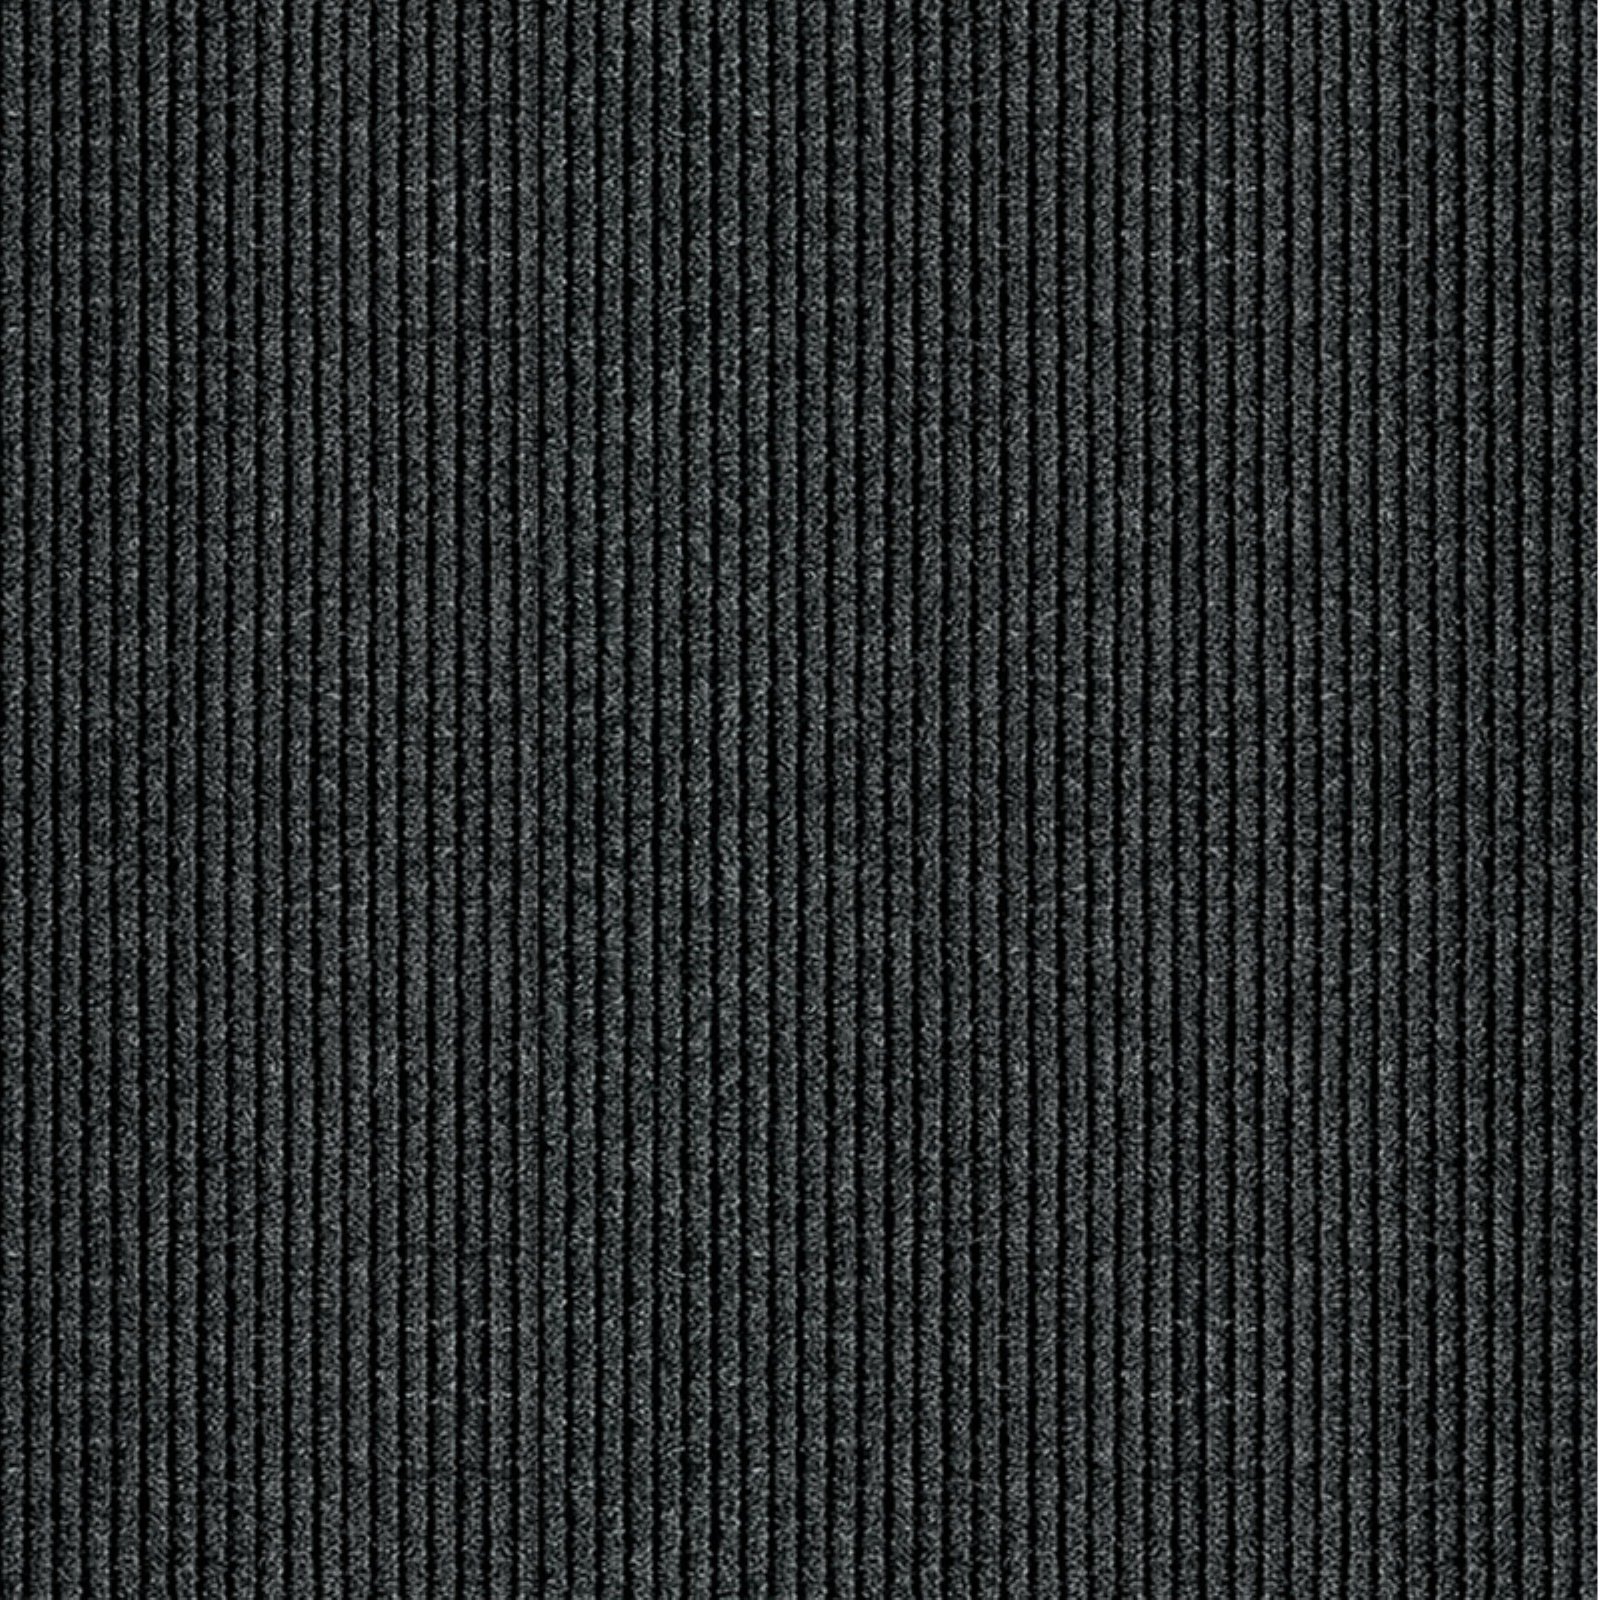 Multy Home MT1000124 Concord Nonslip Carpet Runner, Polypropylene, Grey, 26" x 50' - image 2 of 2